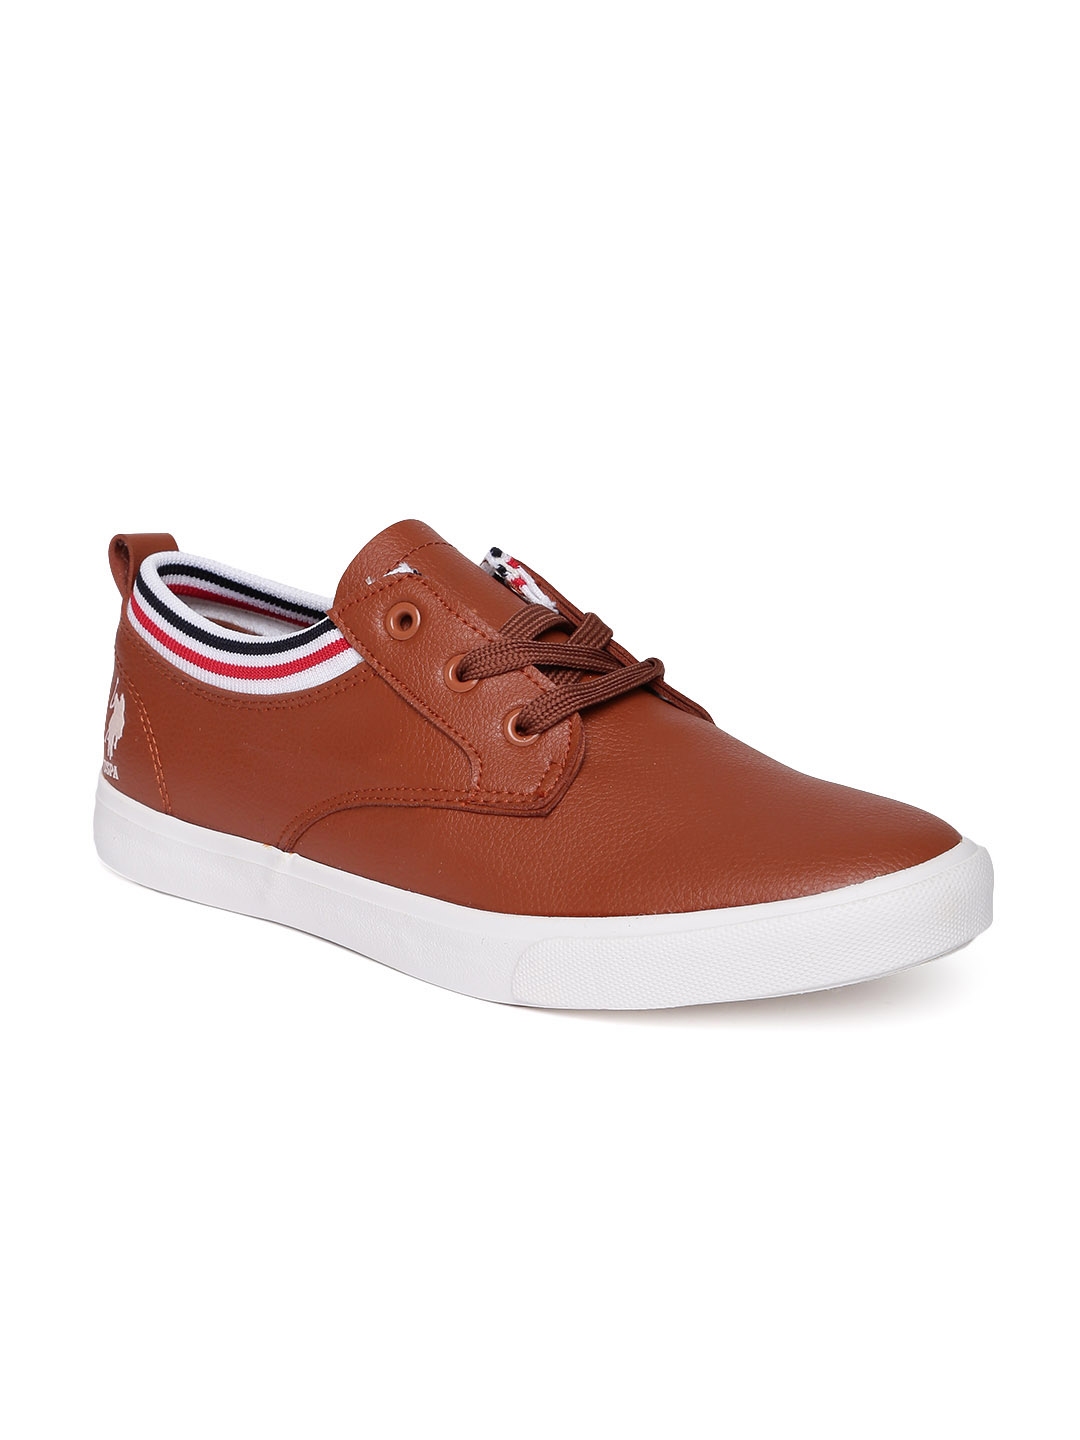 Buy U.S. Polo Assn. Men Brown Sneakers - Casual Shoes for Men 7808855 ...